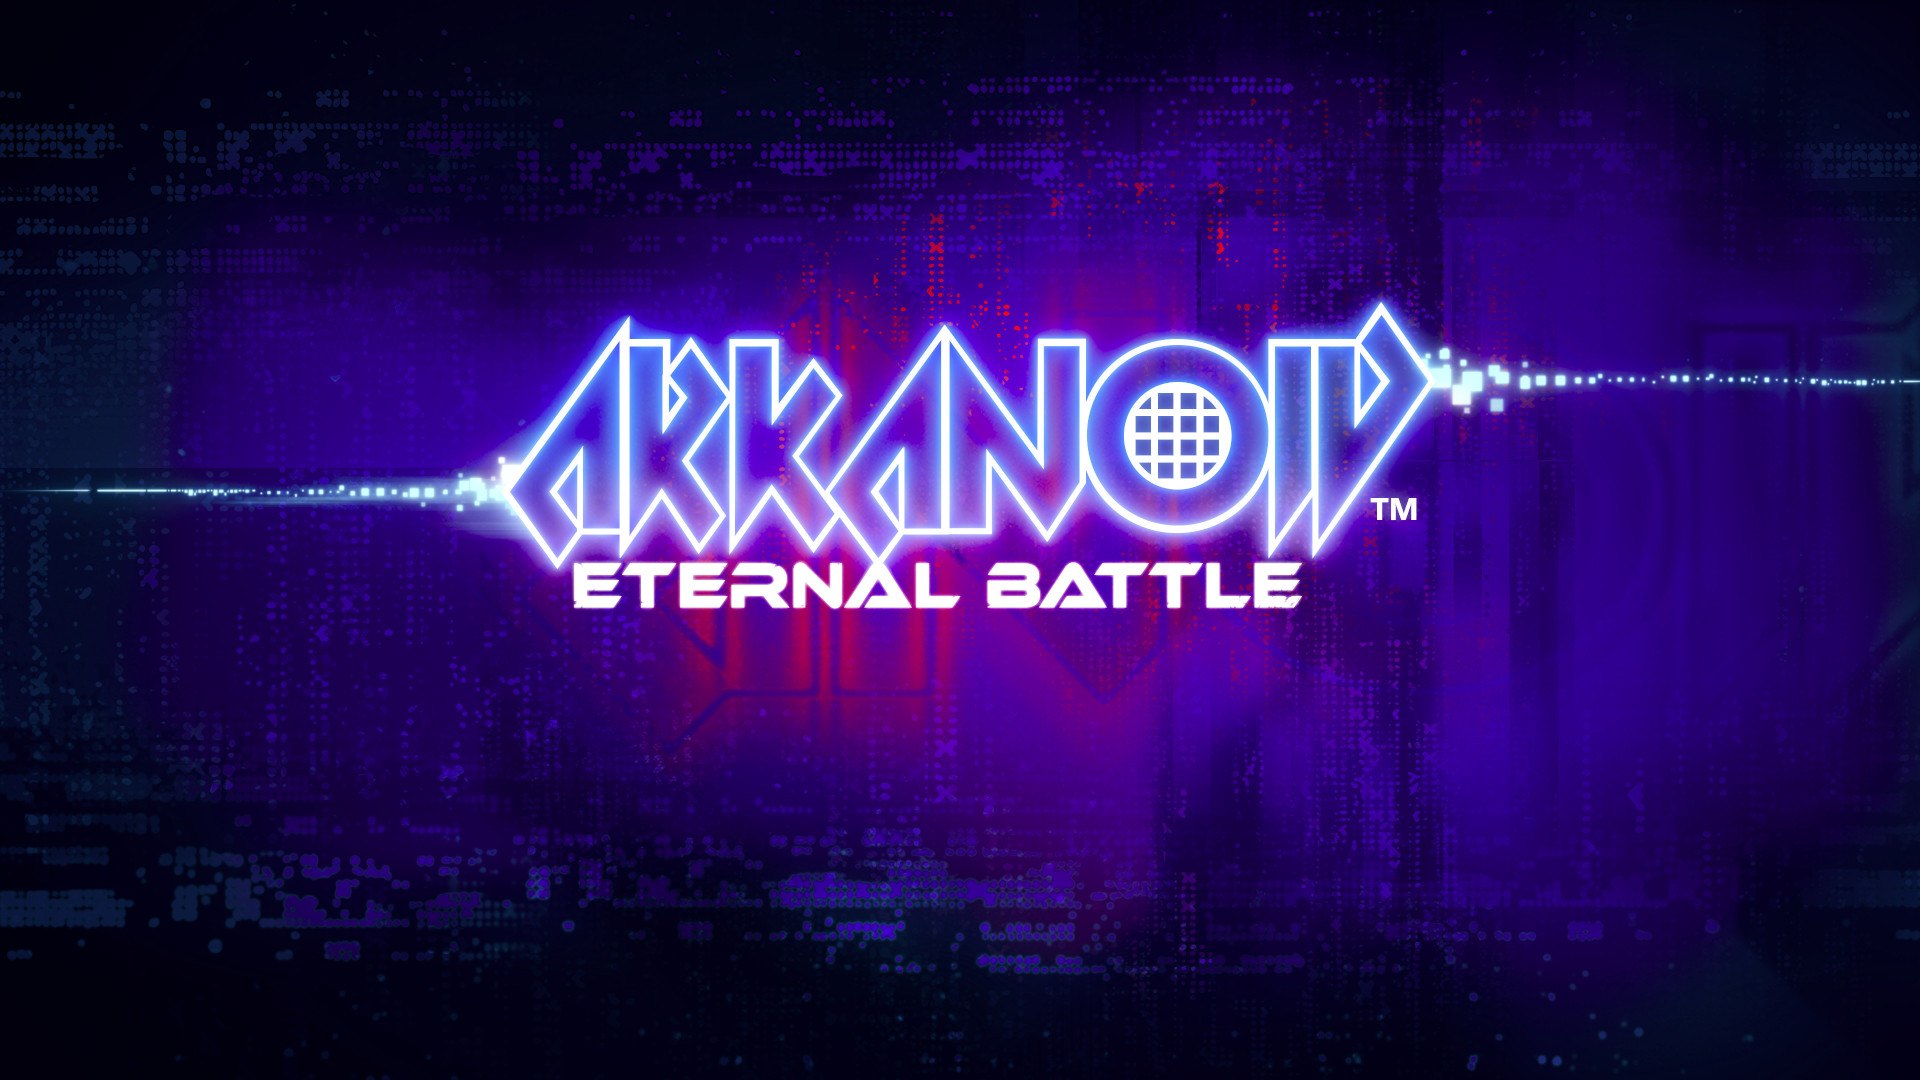 Arkanoid Eternal Battle Recensione